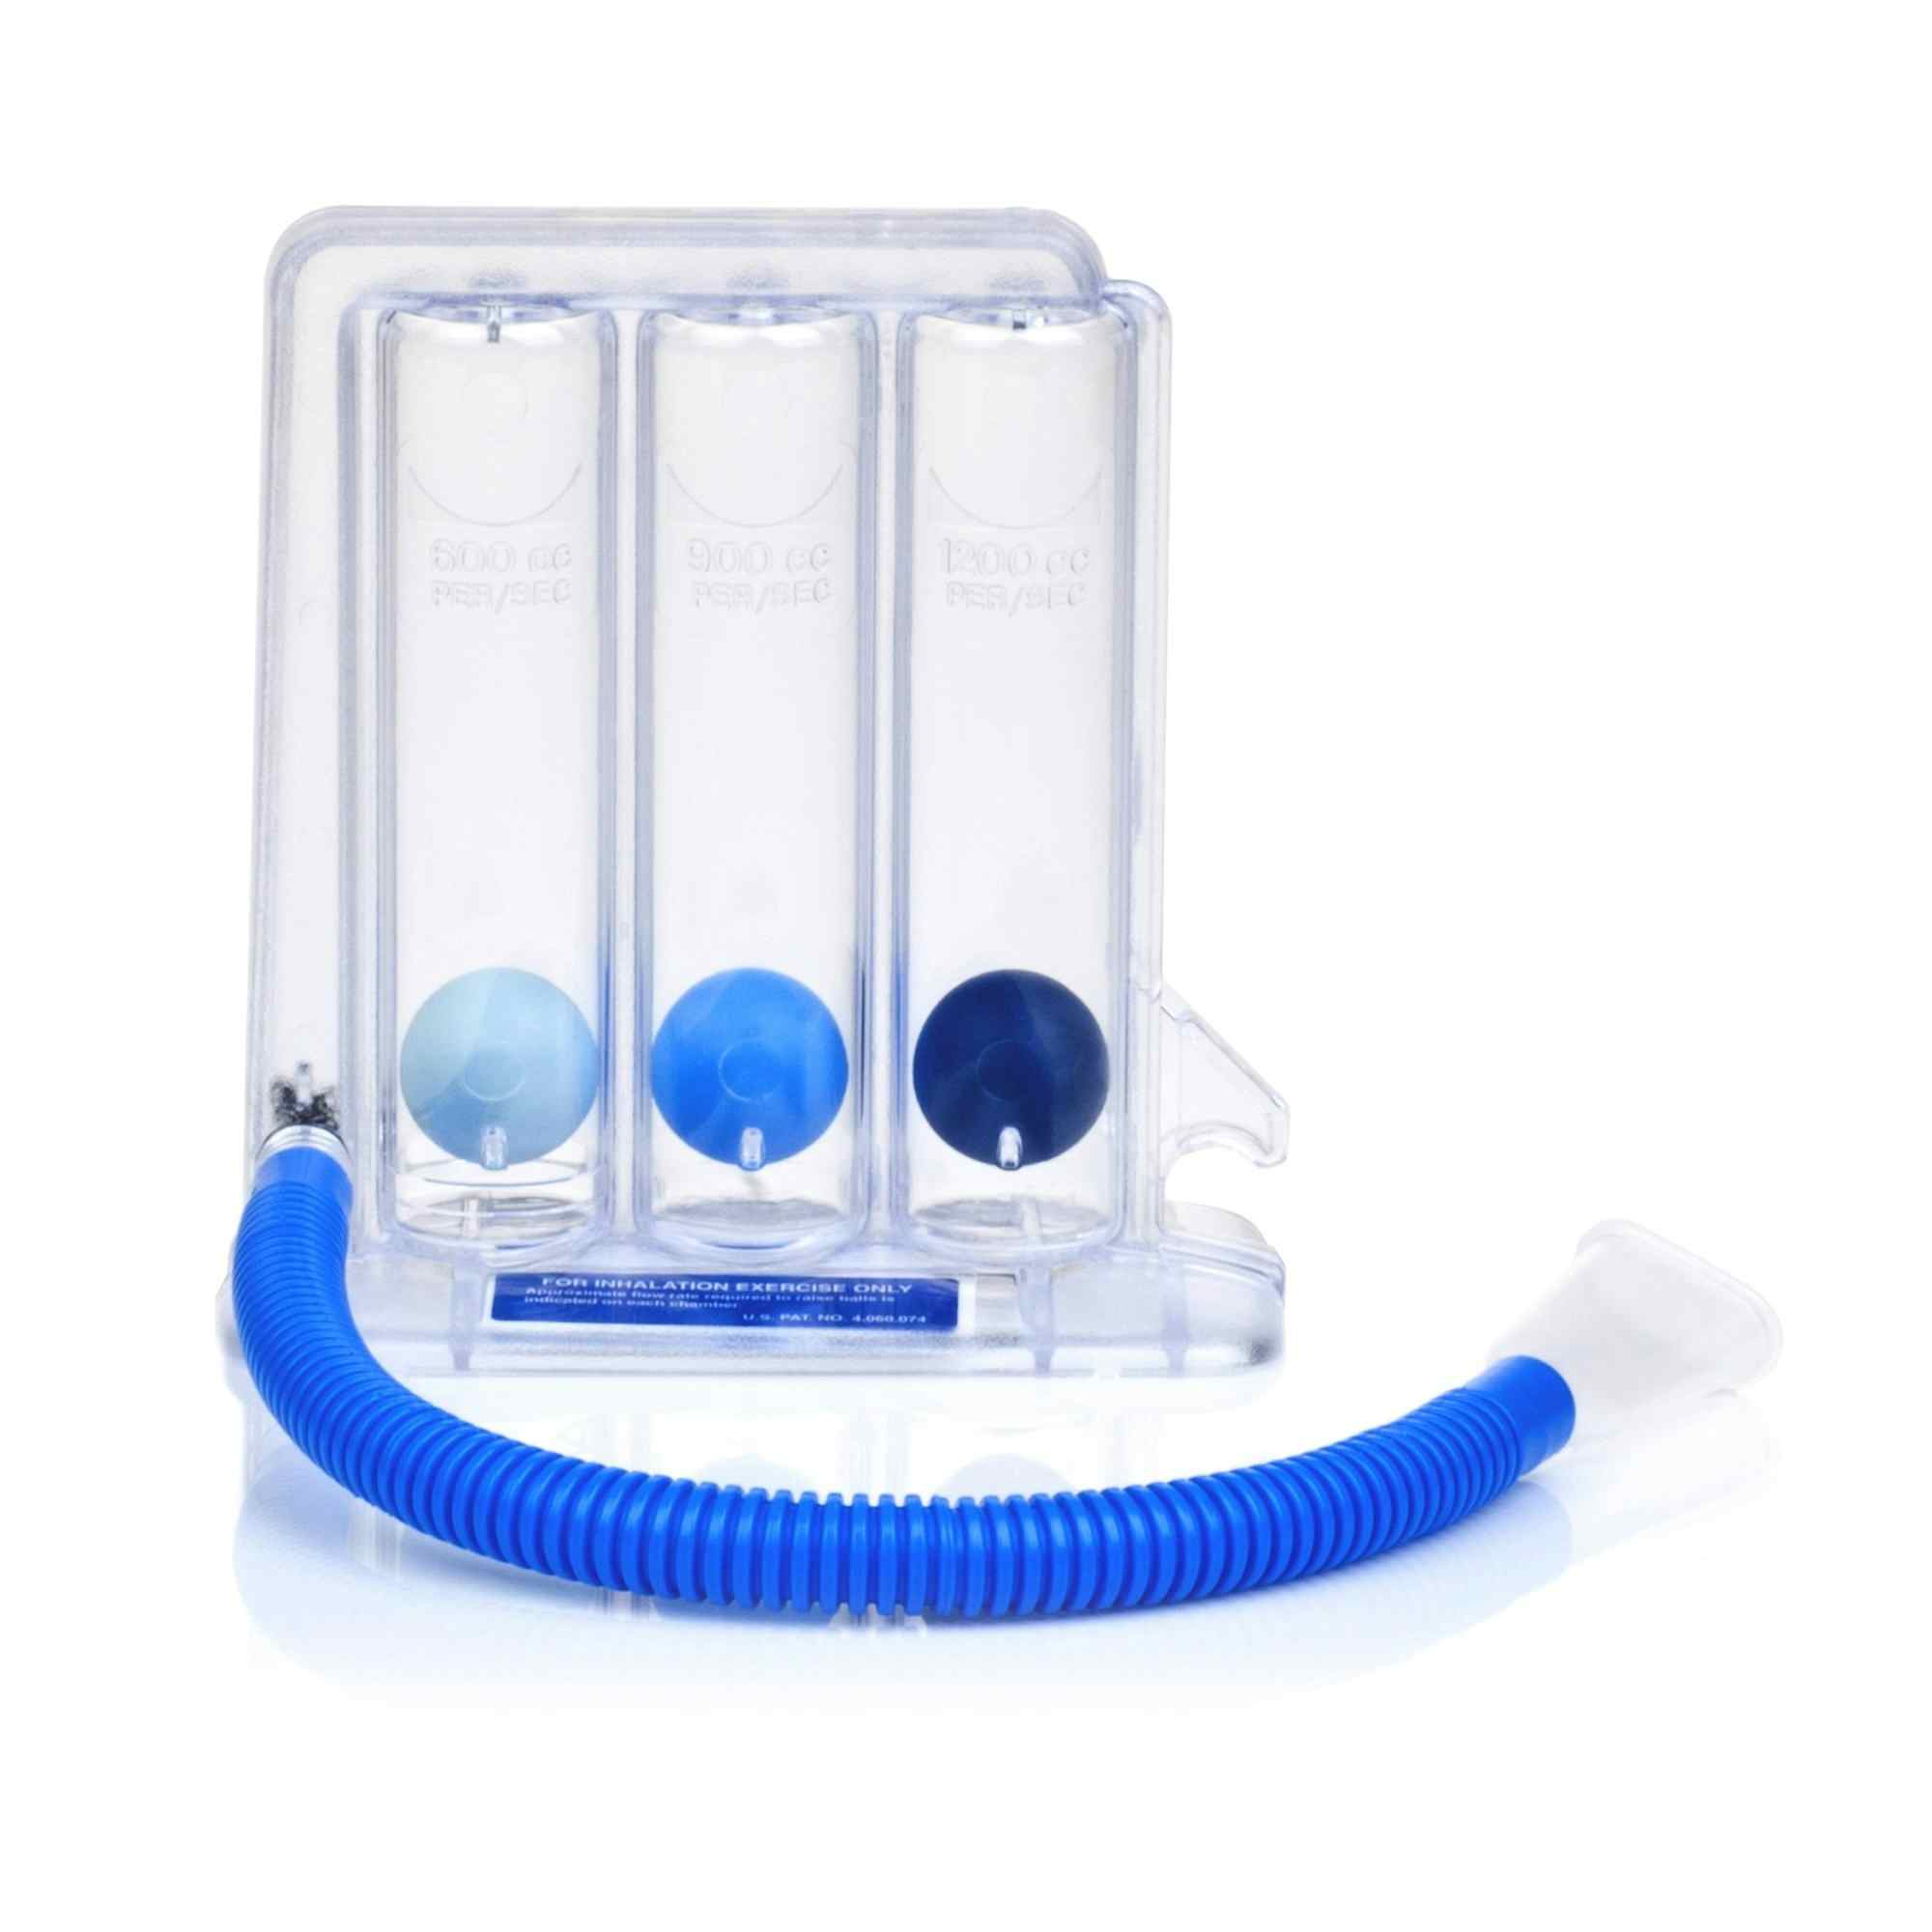 Triflo II Incentive Spirometer Adult